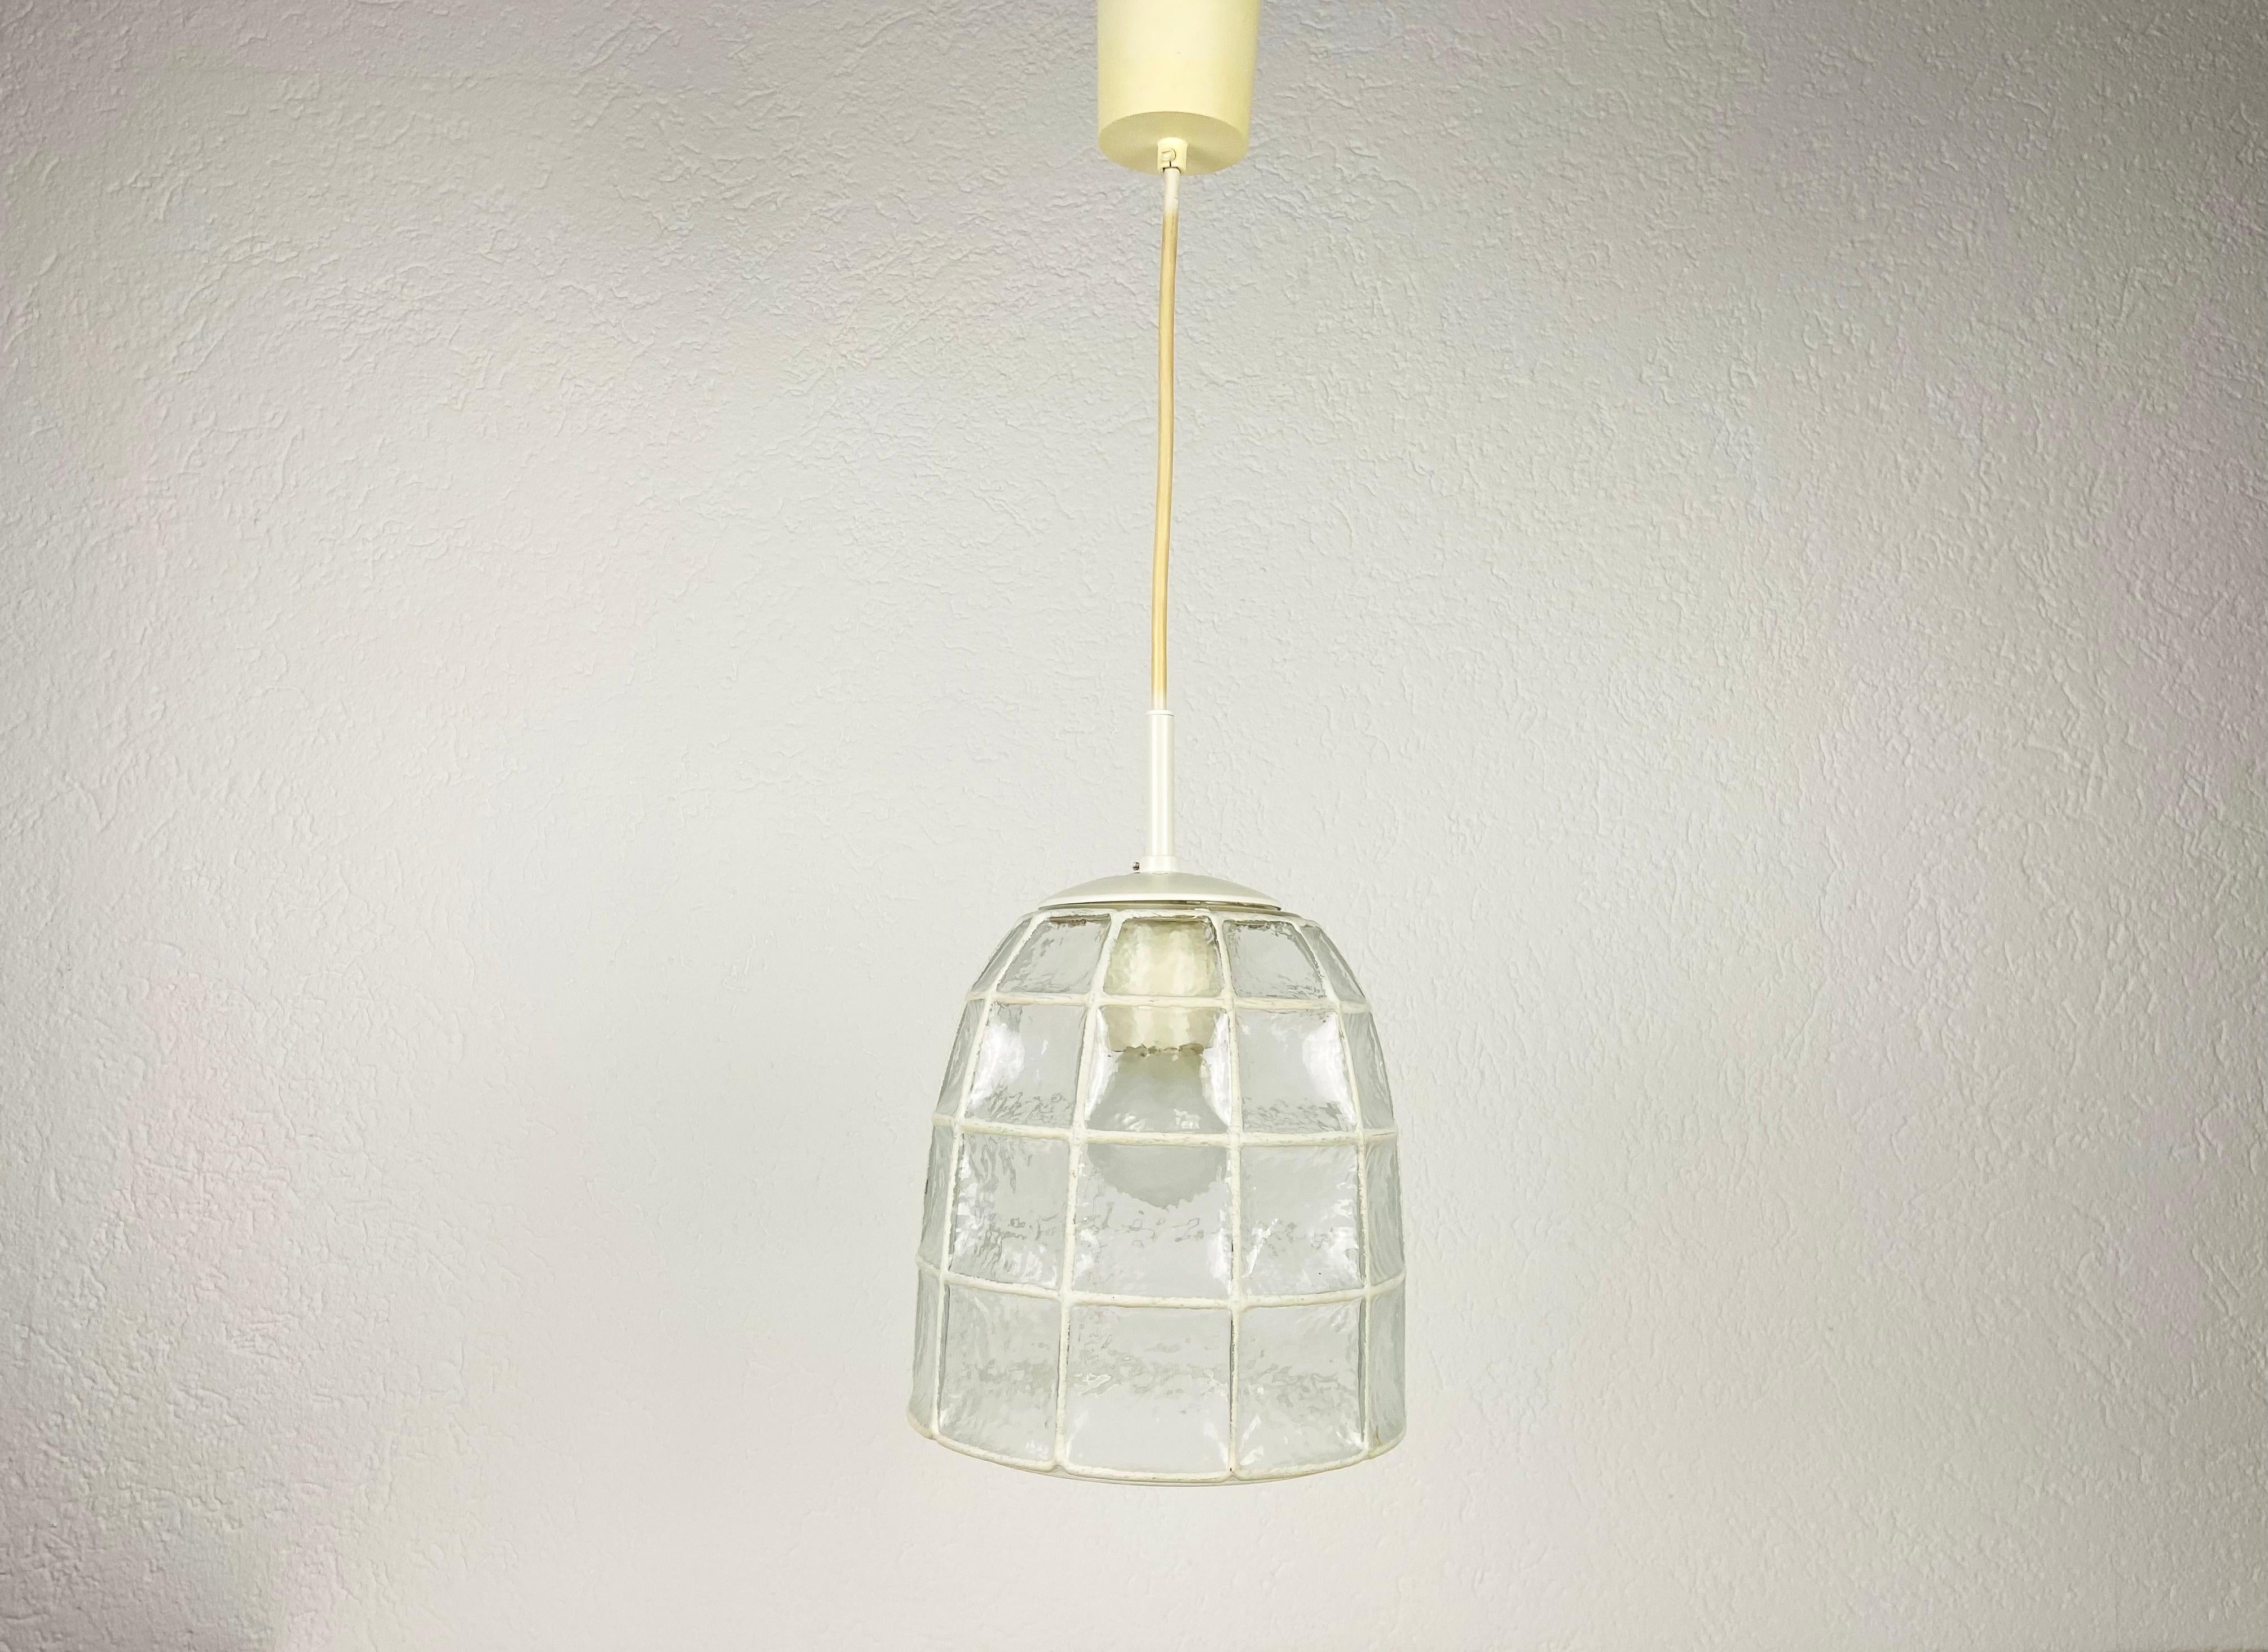 Midcentury Iron and Bubble Glass Pendant lamp by Glashütte Limburg, 1960s For Sale 8